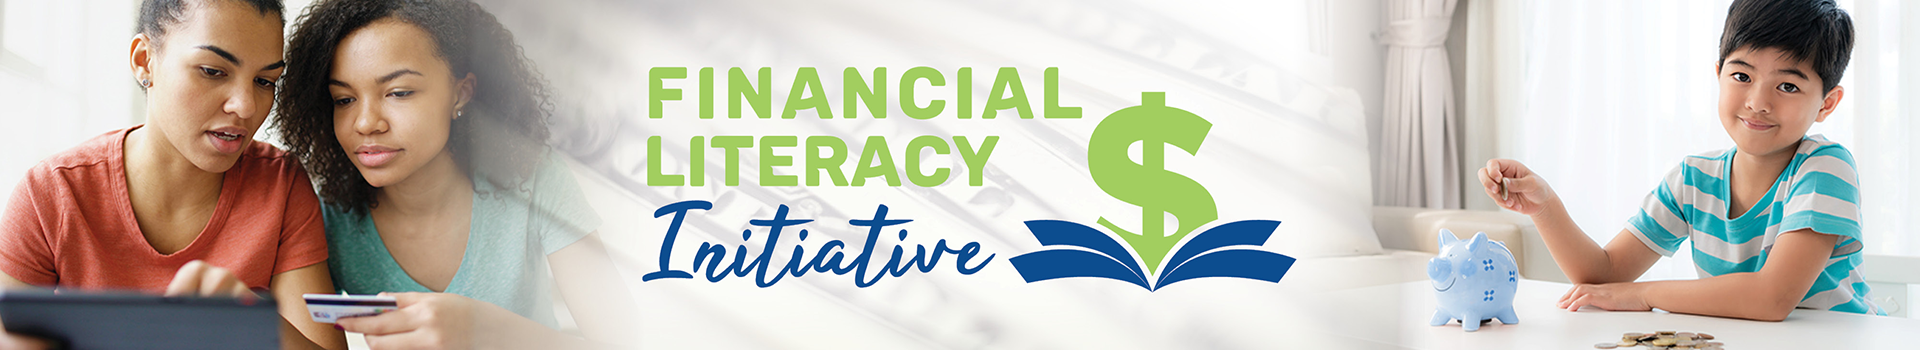 Financial Literacy Initiative